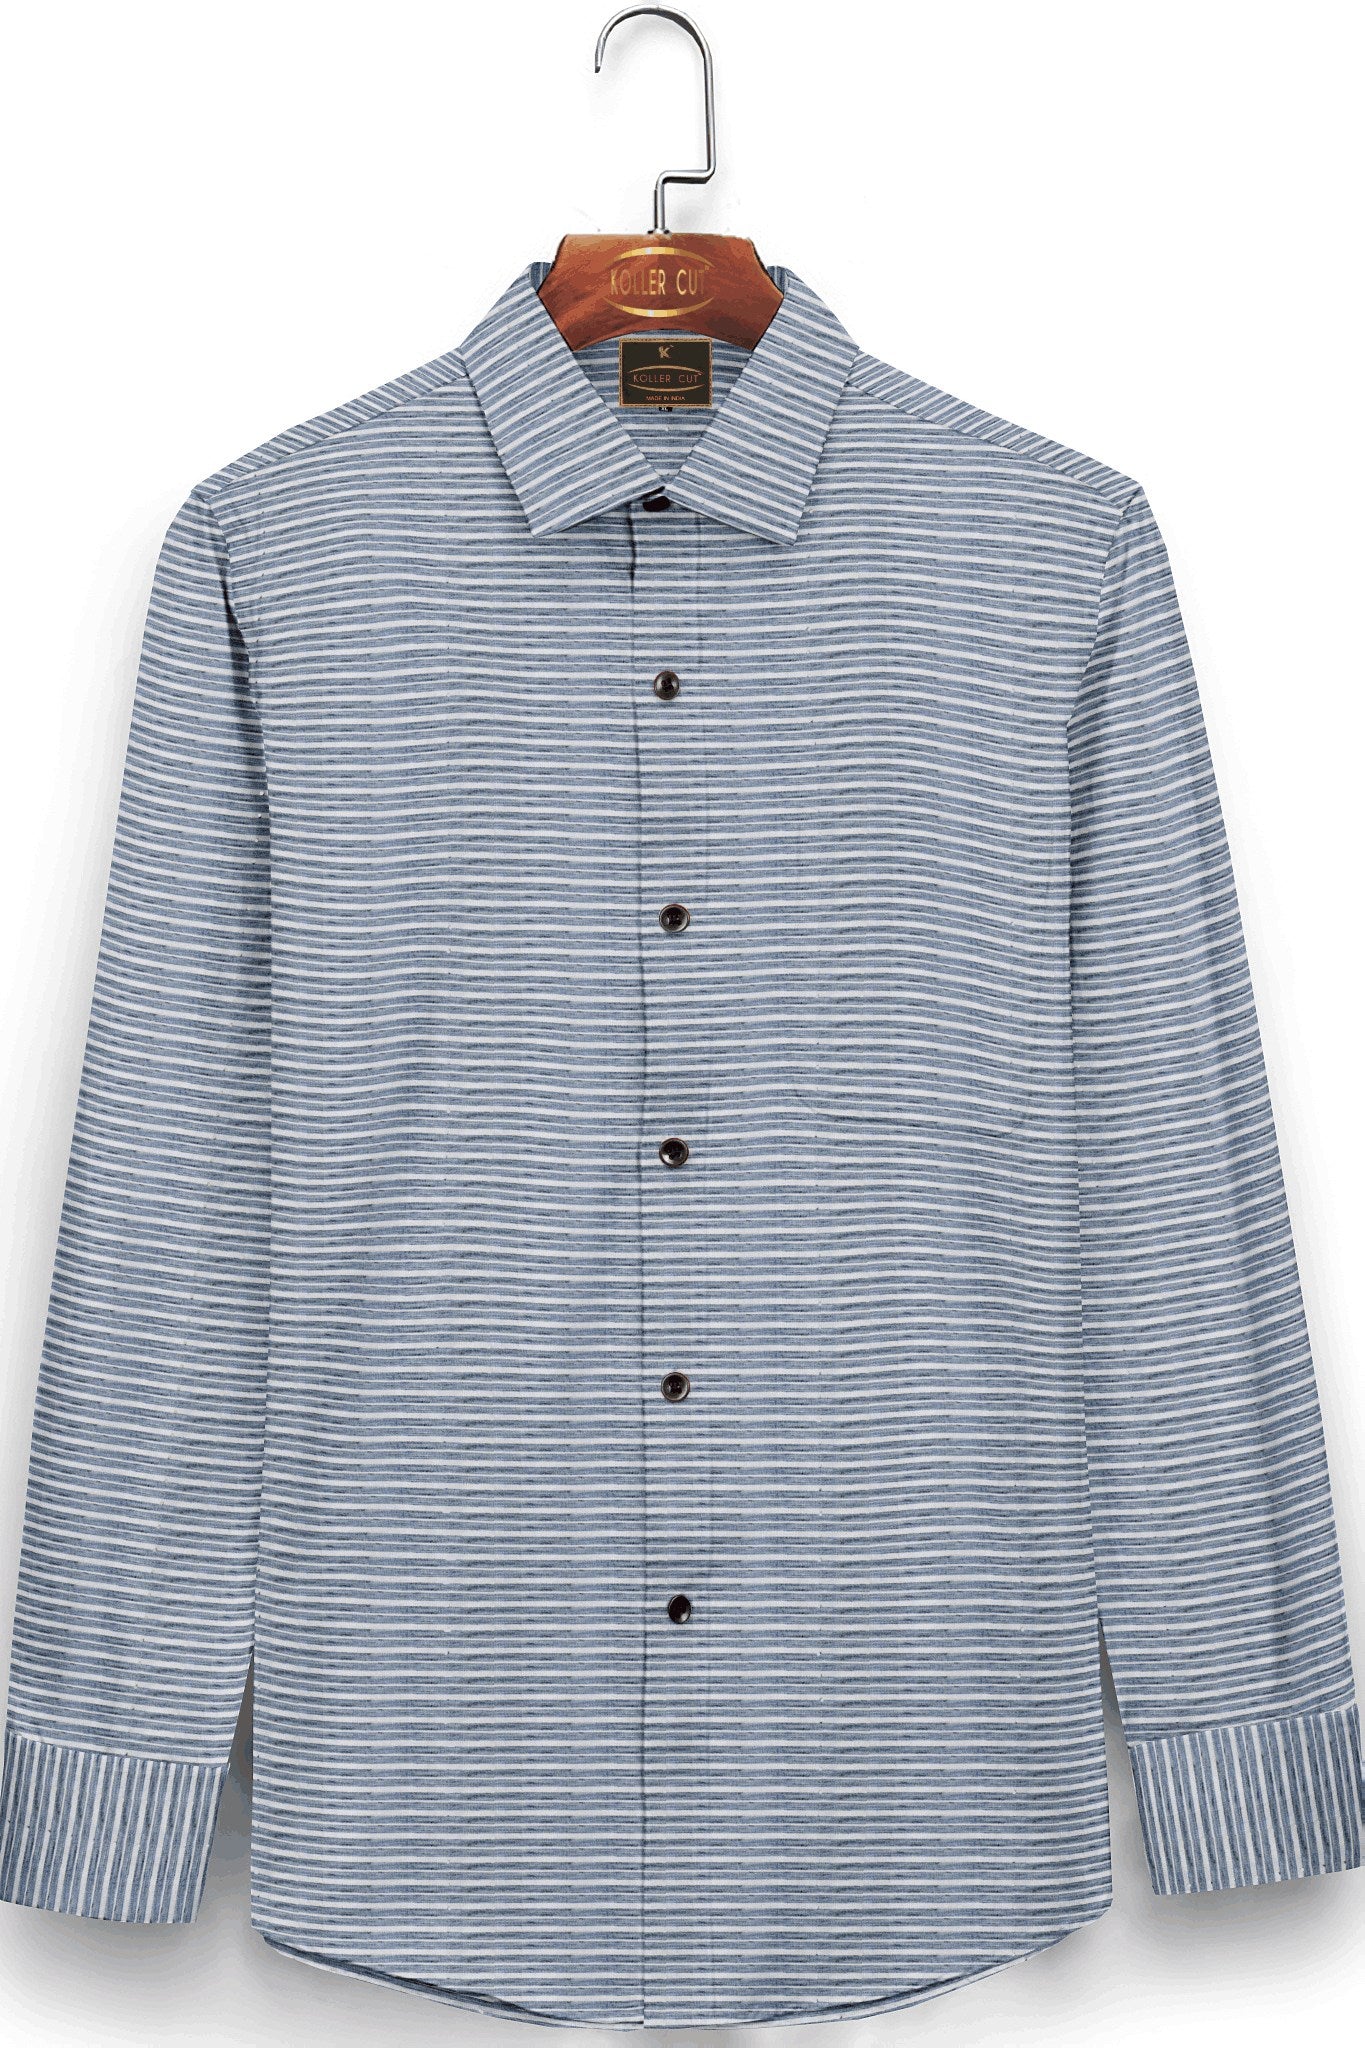 White with Lucid blue Pinstriped Men's 100% Premium Cotton Shirt